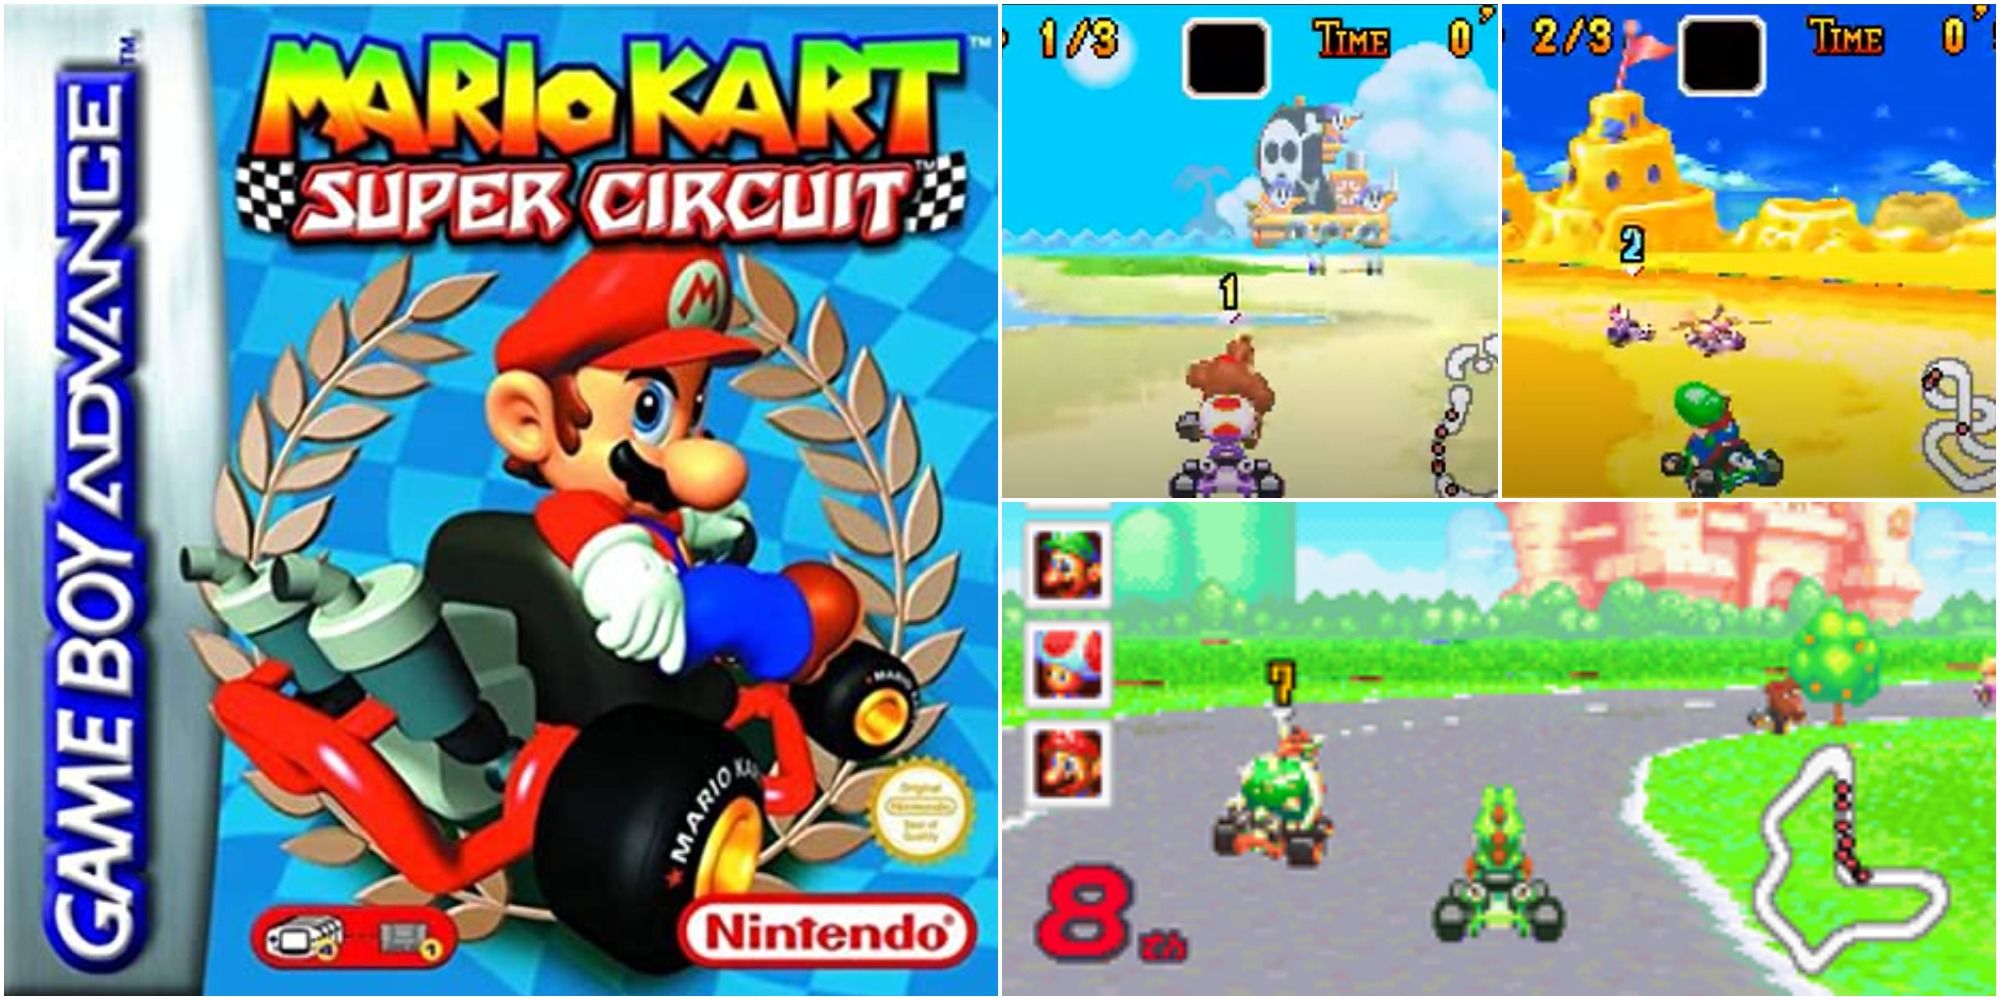 Mario Kart Super Circuit Game Boy Advance